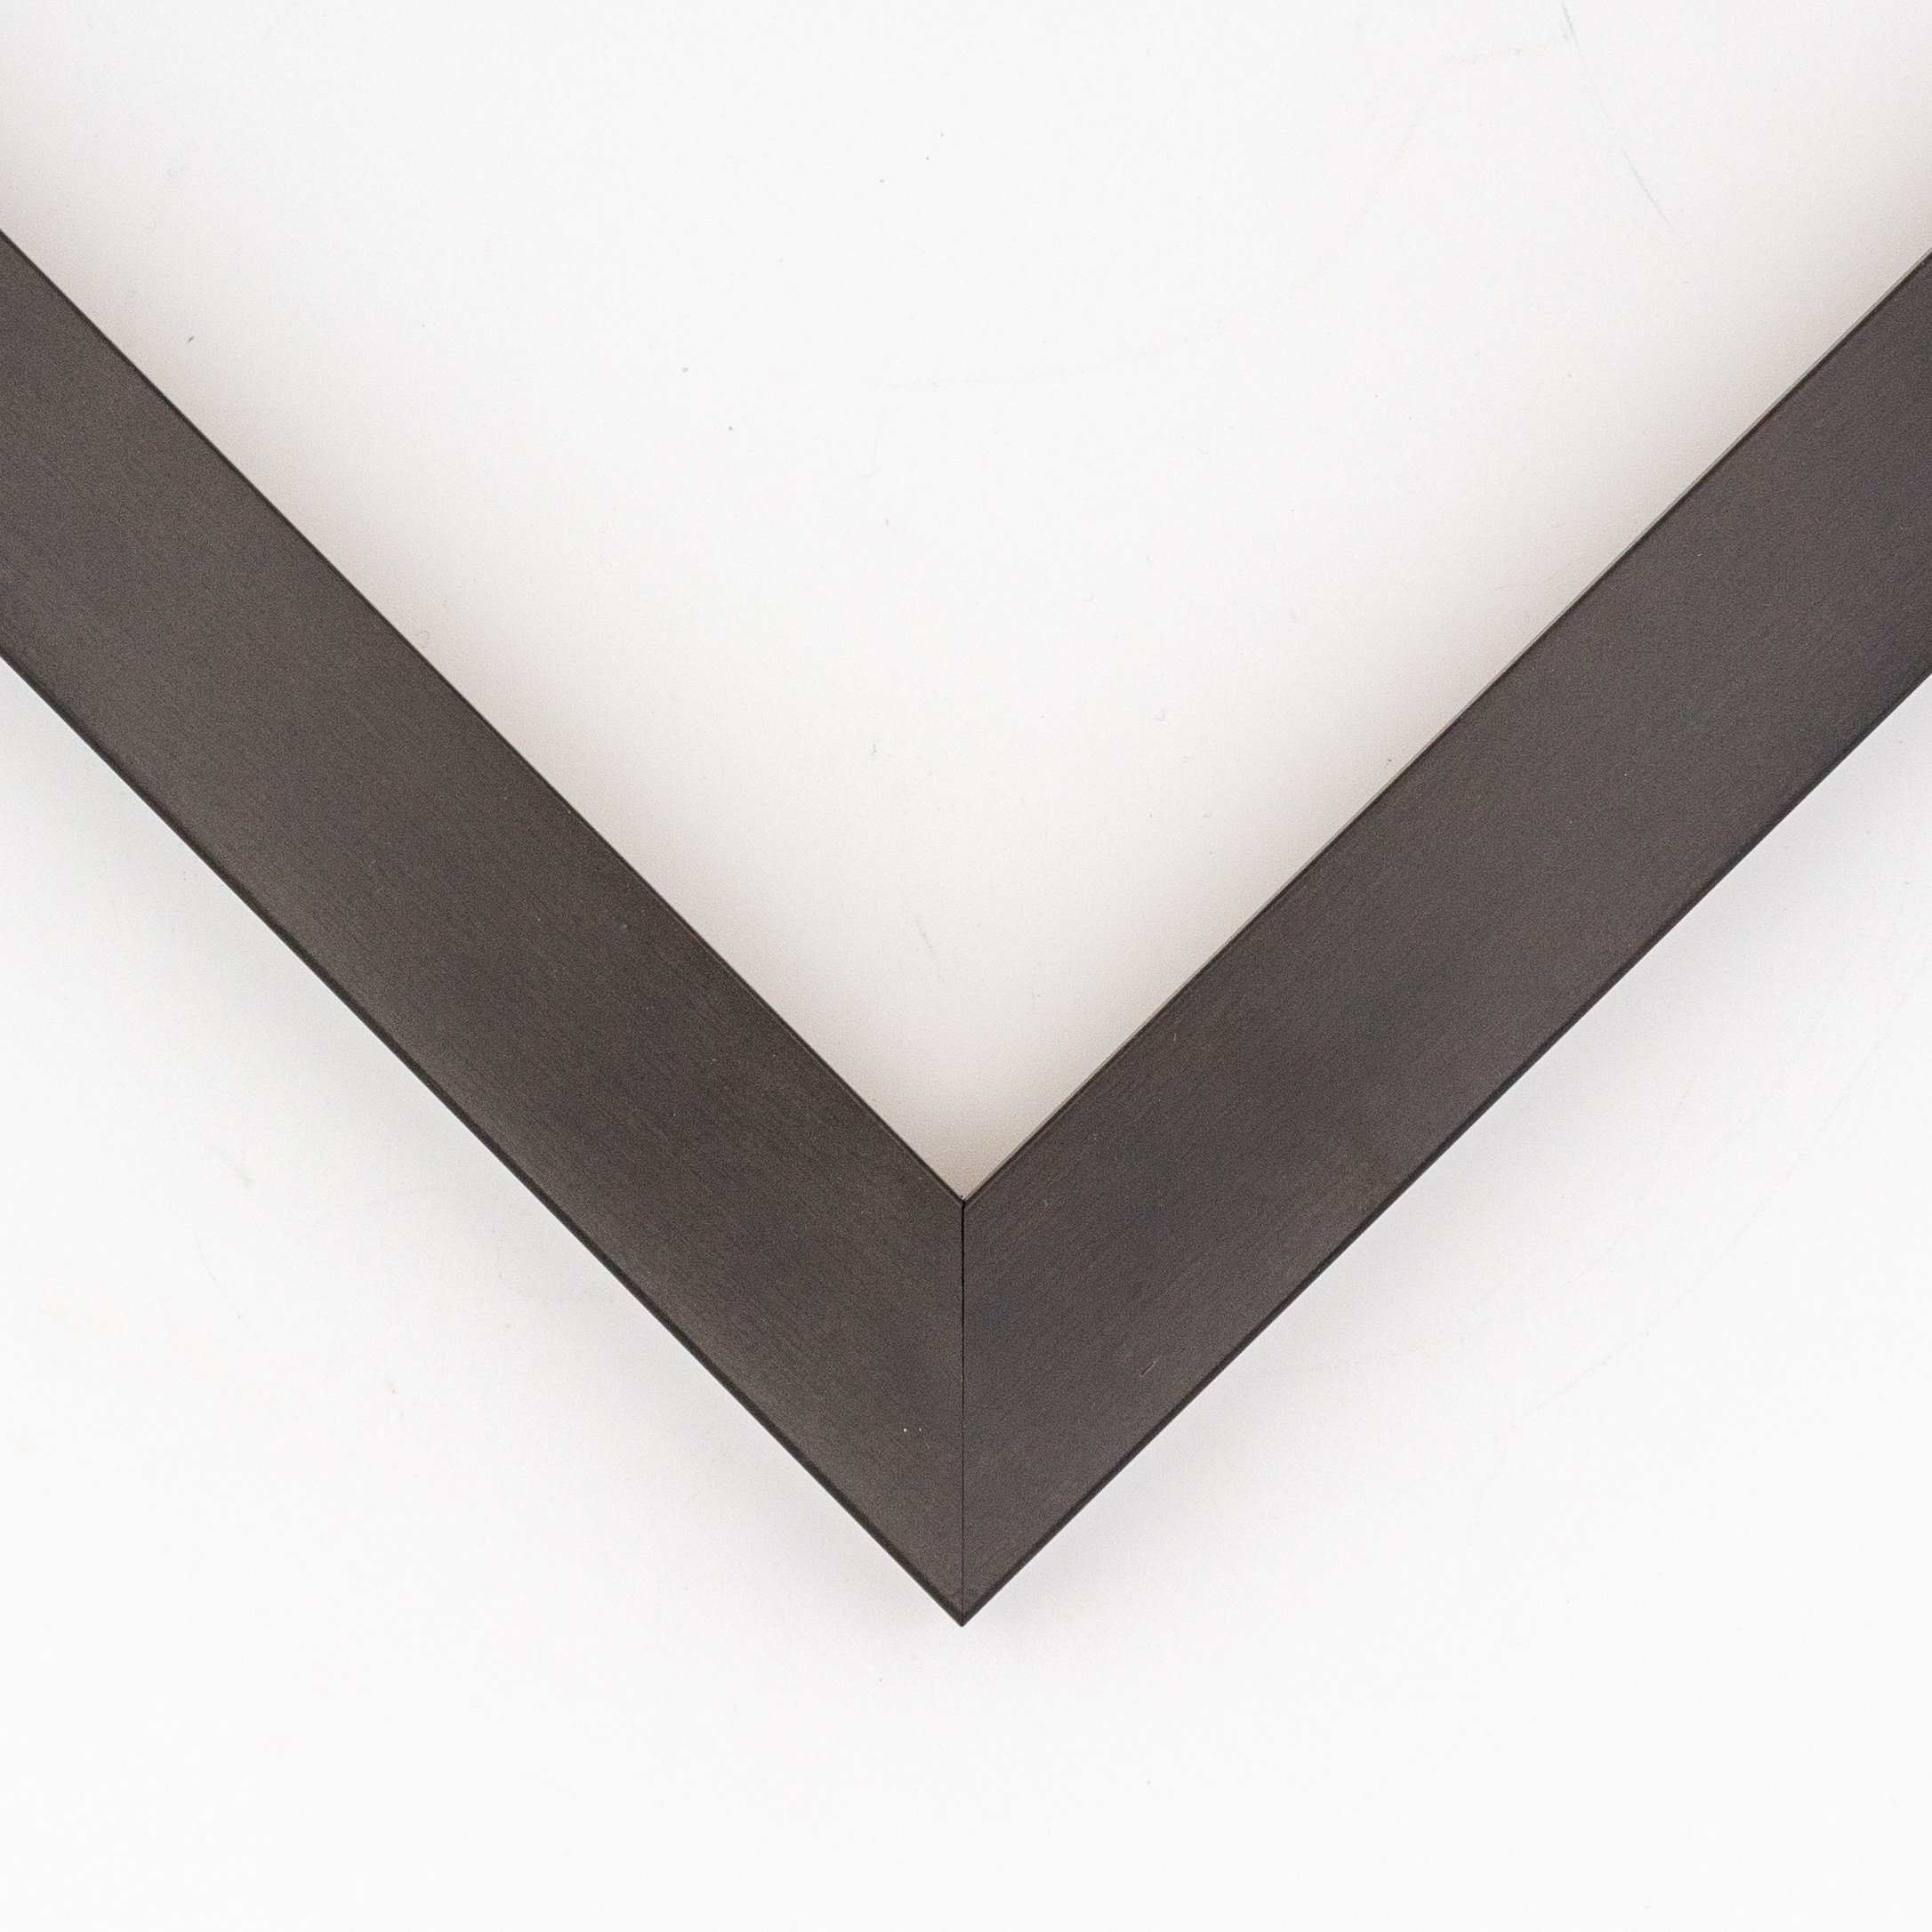 CustomPictureFrames.com 11x14 Flat Charcoal Grey Wood Frame - "The Edge" Medium - Great for Posters, Photos, Art Prints, Mirror, Chalk Boar